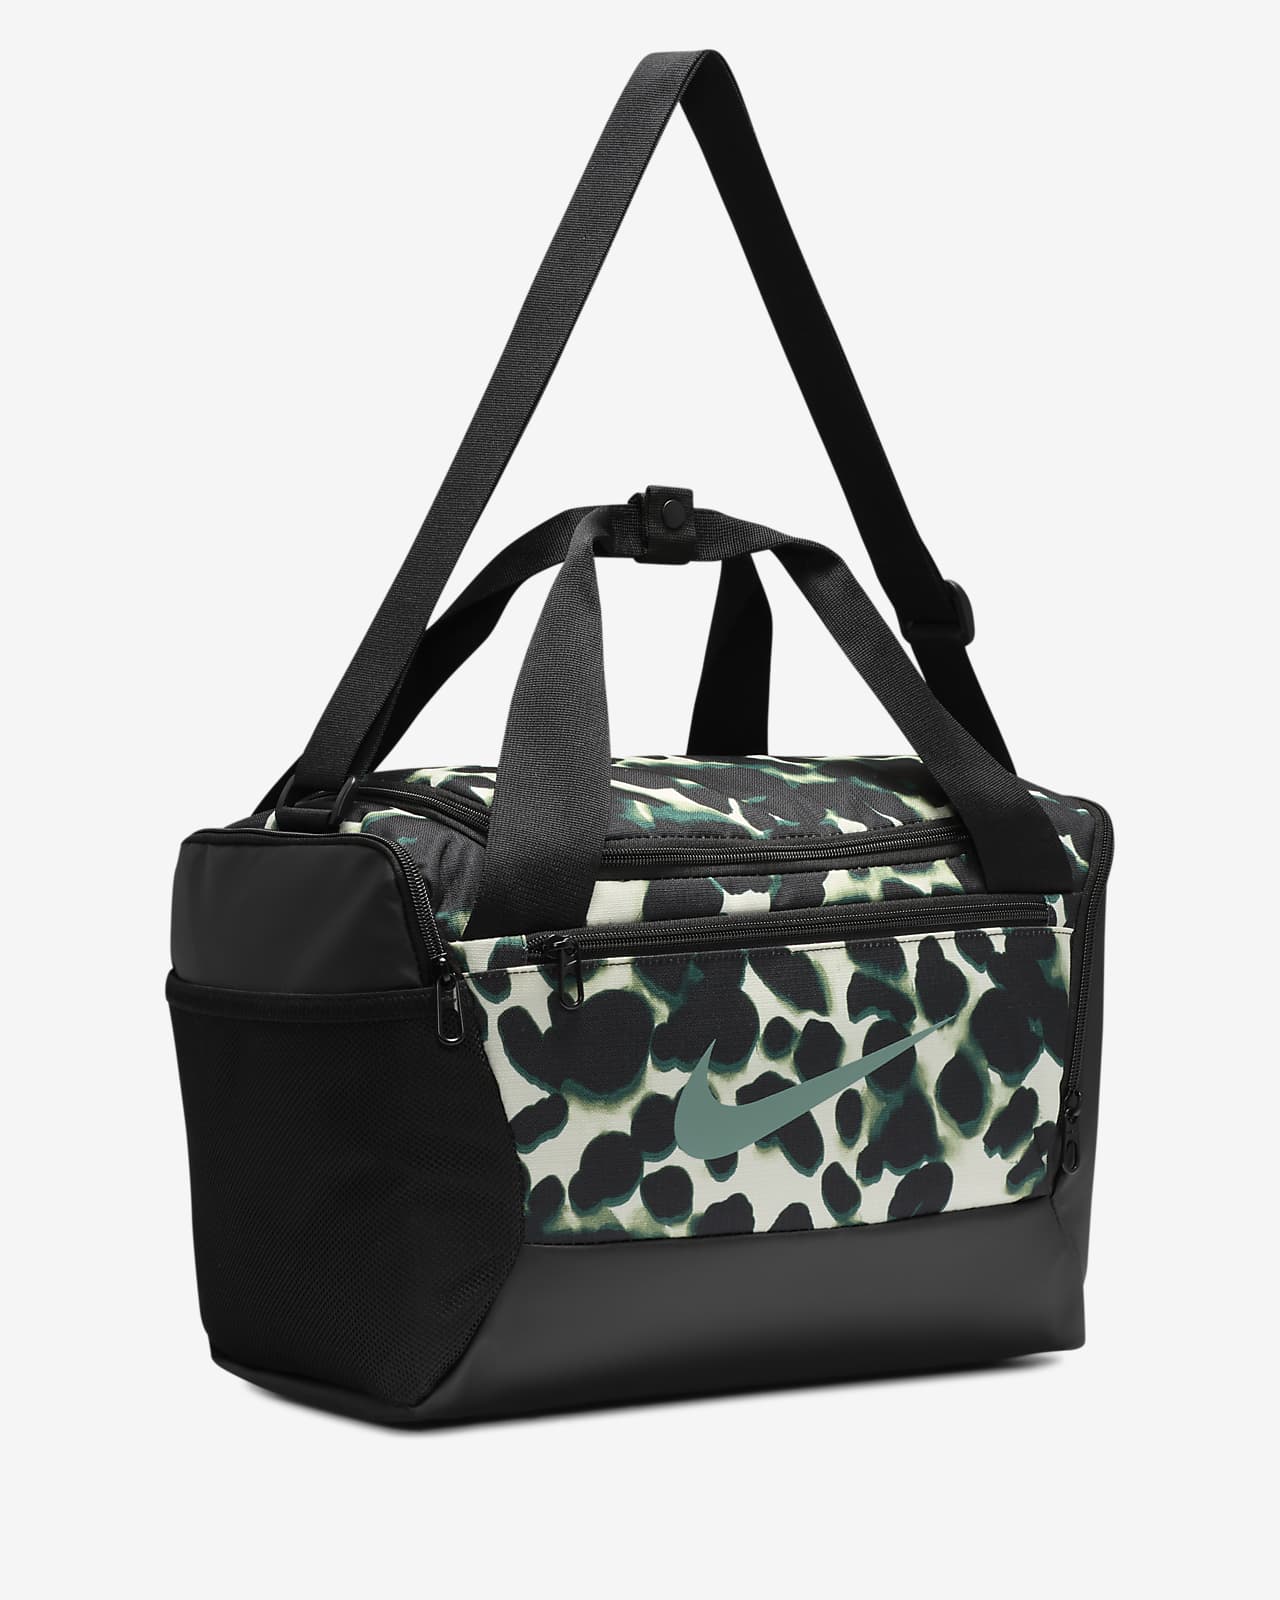 Nike Brasilia Duffel Bag (XS - 25 litres) 💯% Authentic BNIB!!!